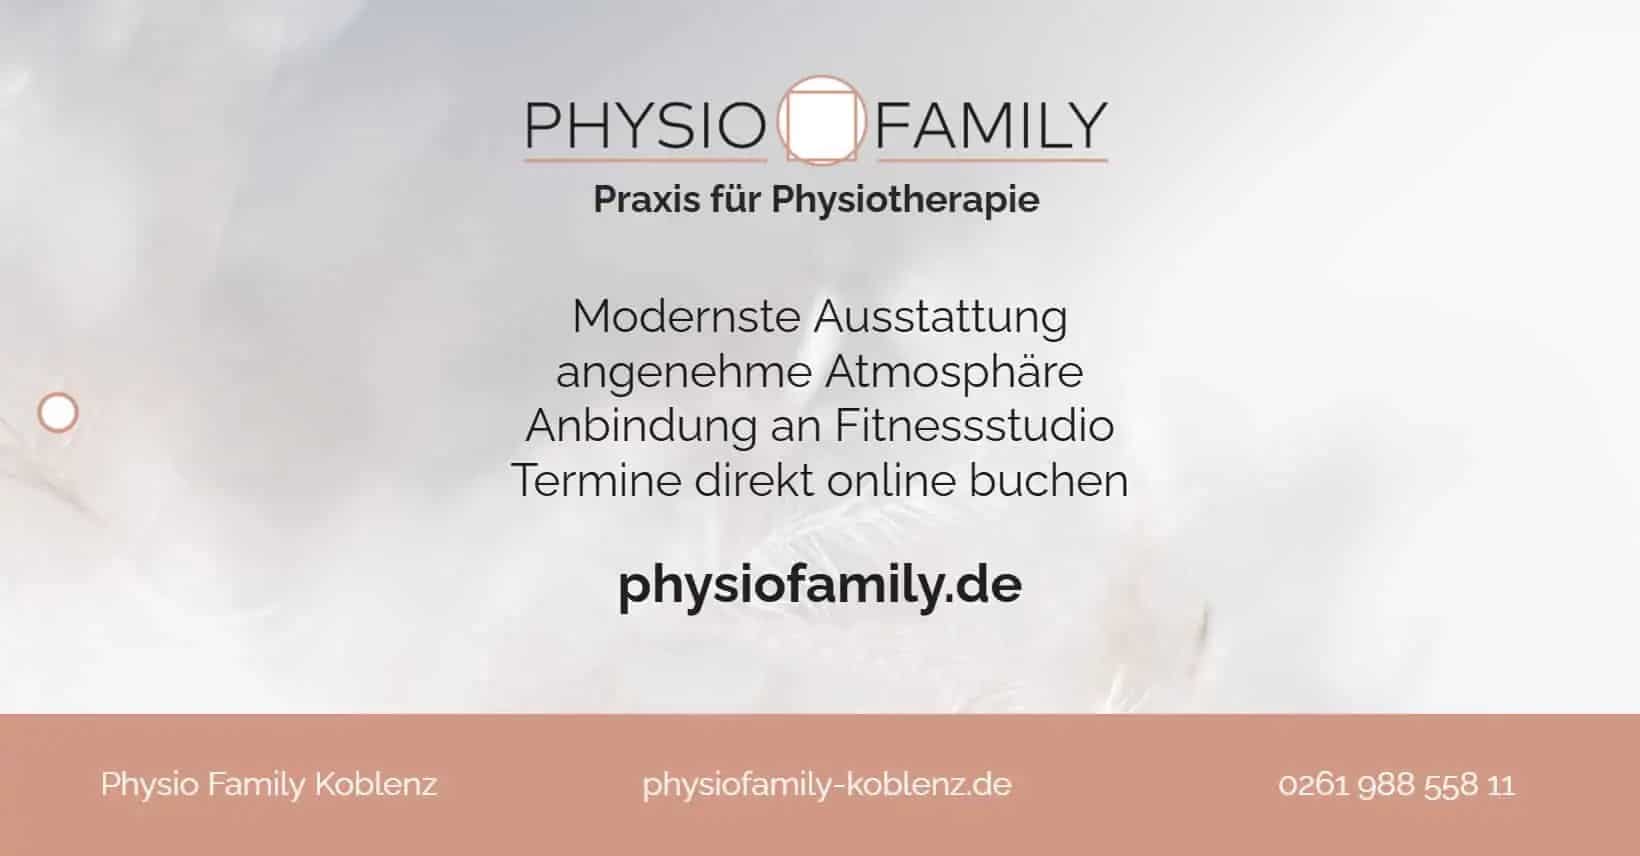 (c) Physiofamily-koblenz.de